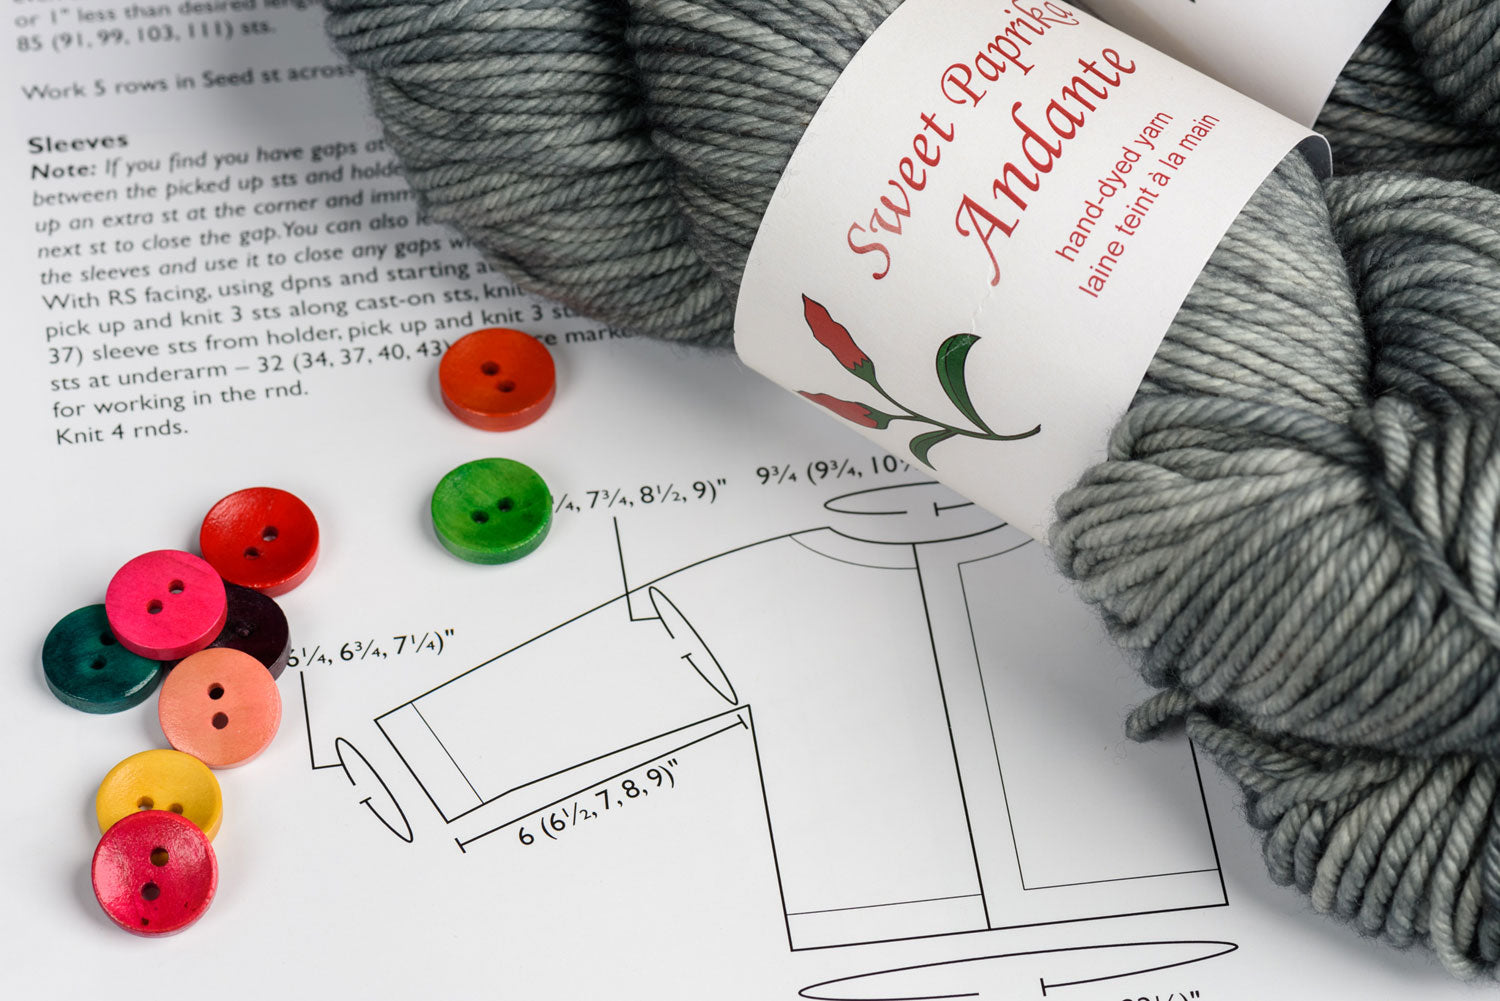 Little Knots cardigan Knitting Kit